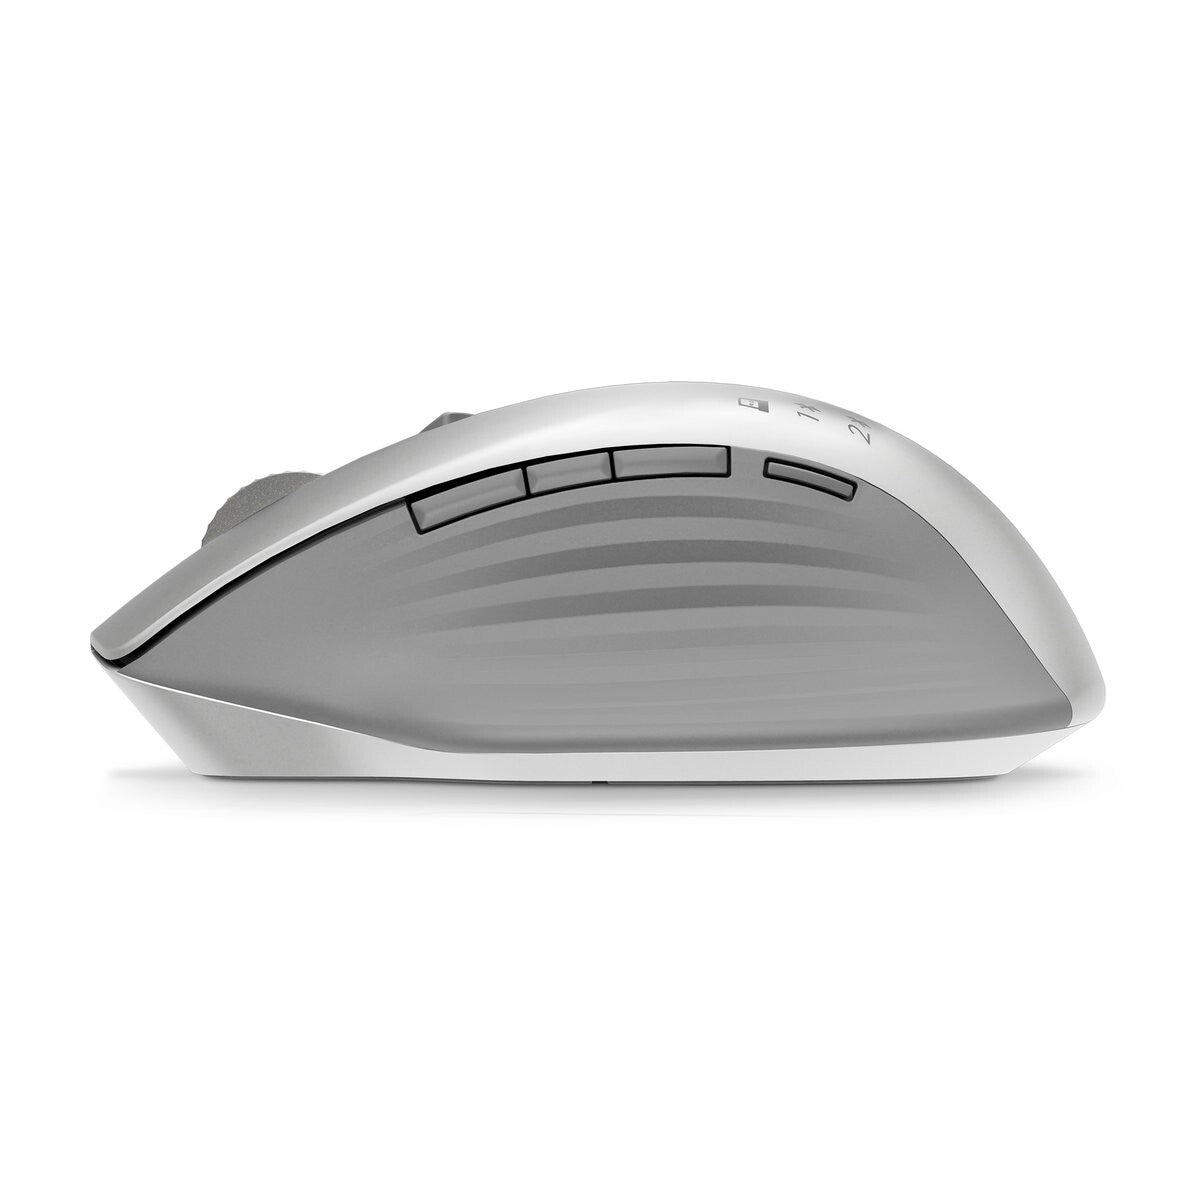 Bezdrátová myš HP 930 Creator (1D0K9AA)